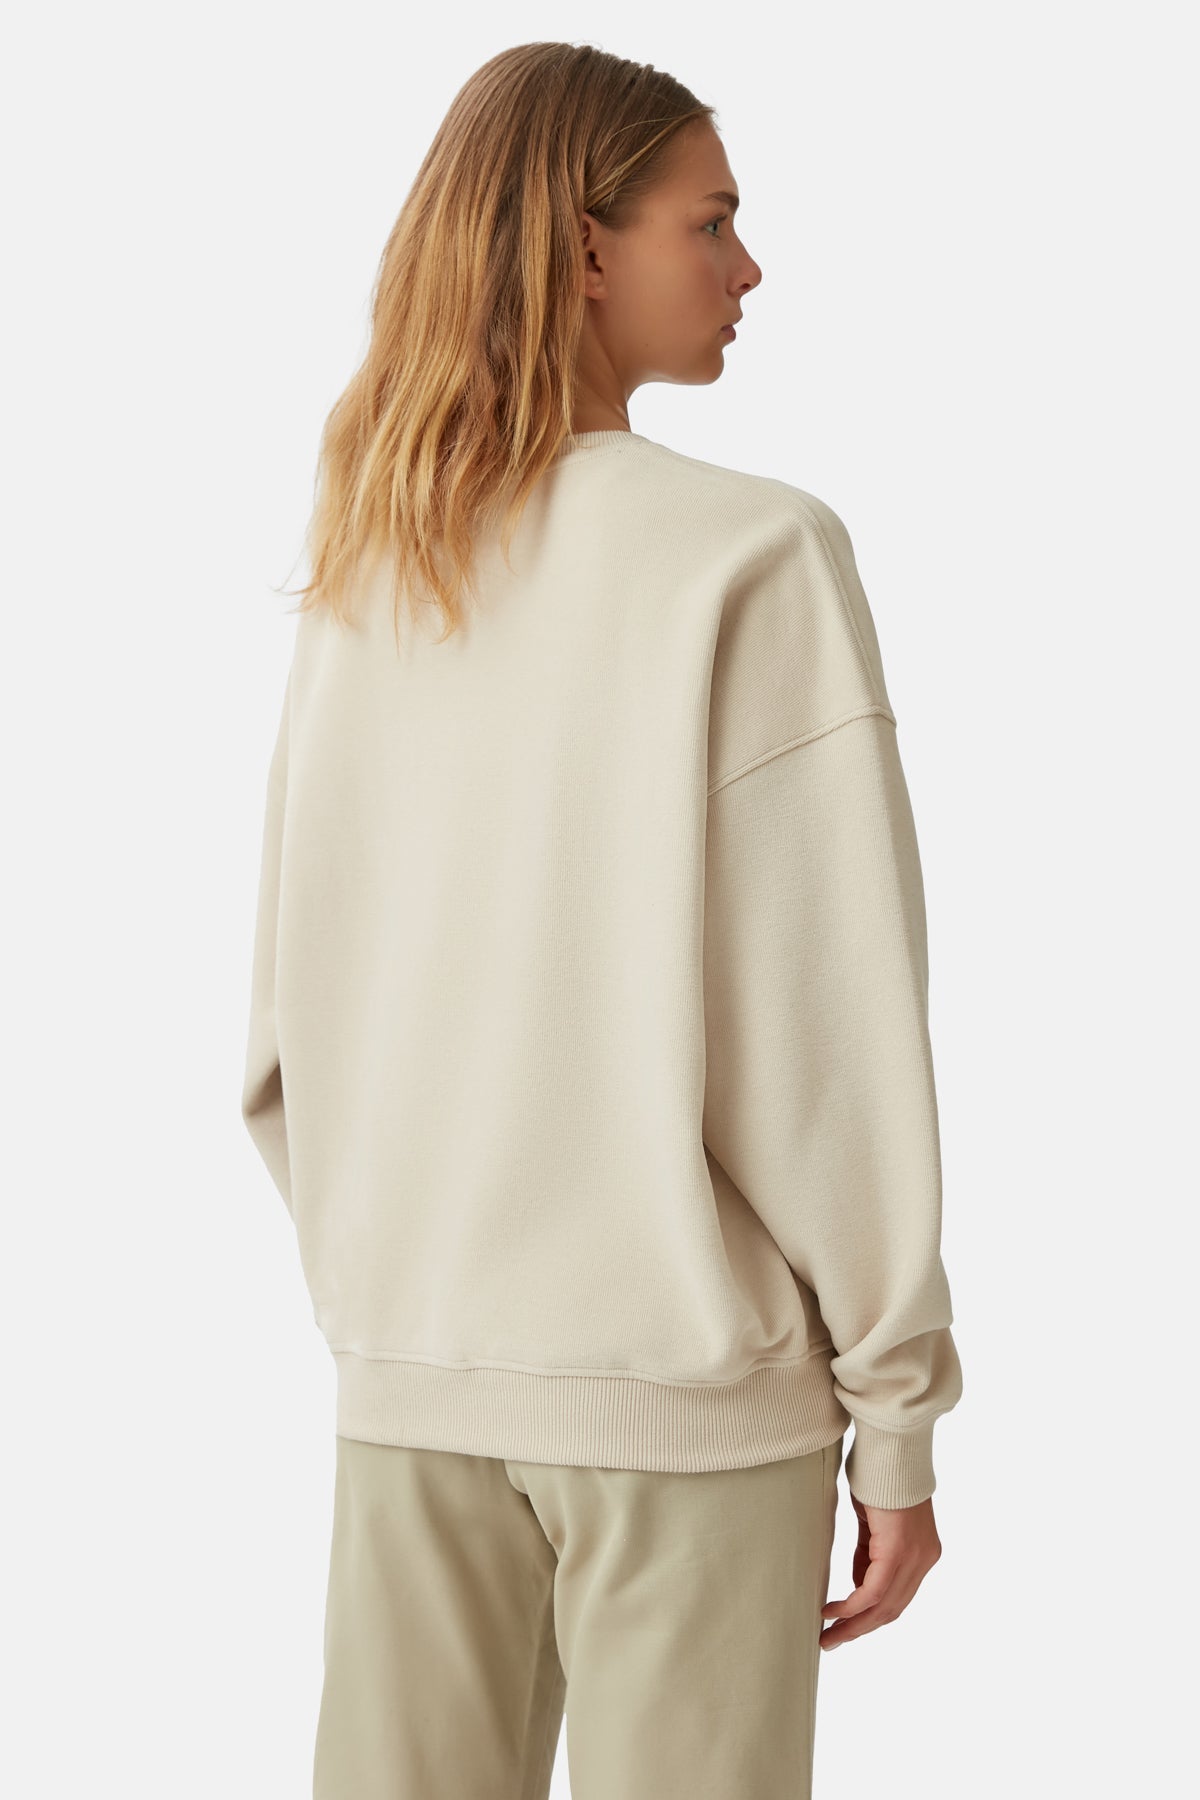 Sincap Super Soft Oversize Sweatshirt - Parşömen Bej